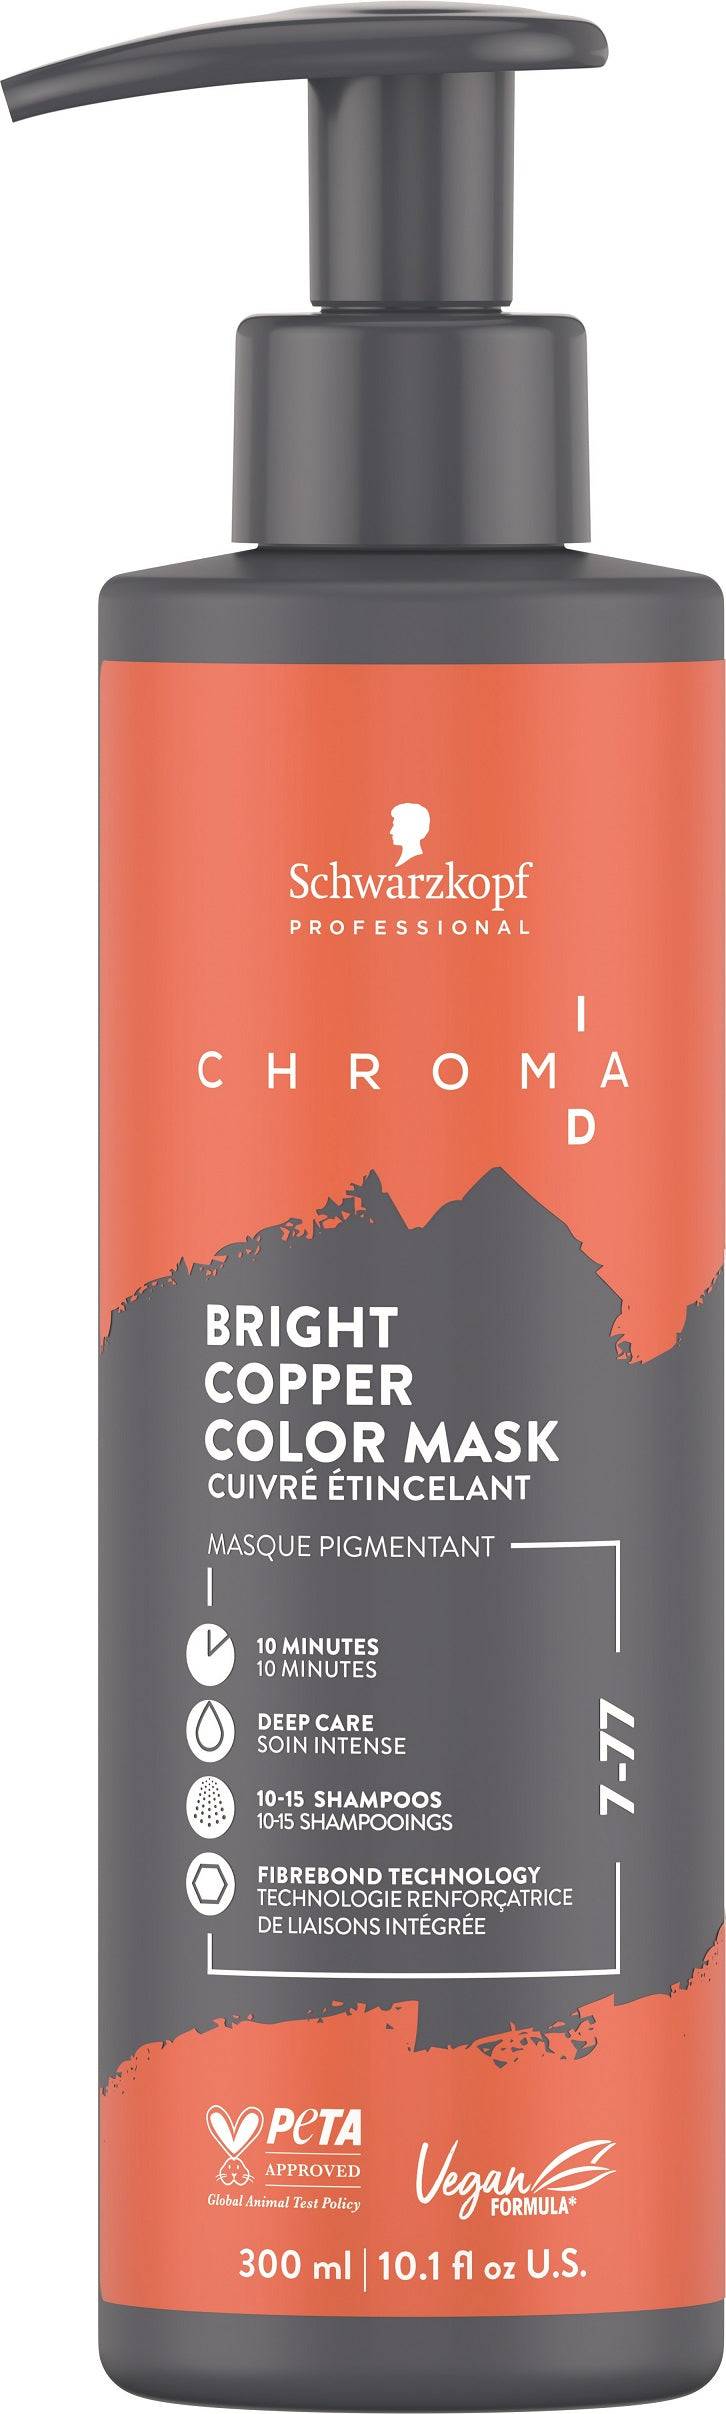 Schwarzkopf Professional Chroma ID 7-77 Bright Copper Bonding Color Mask at Eds Hair Bramhall